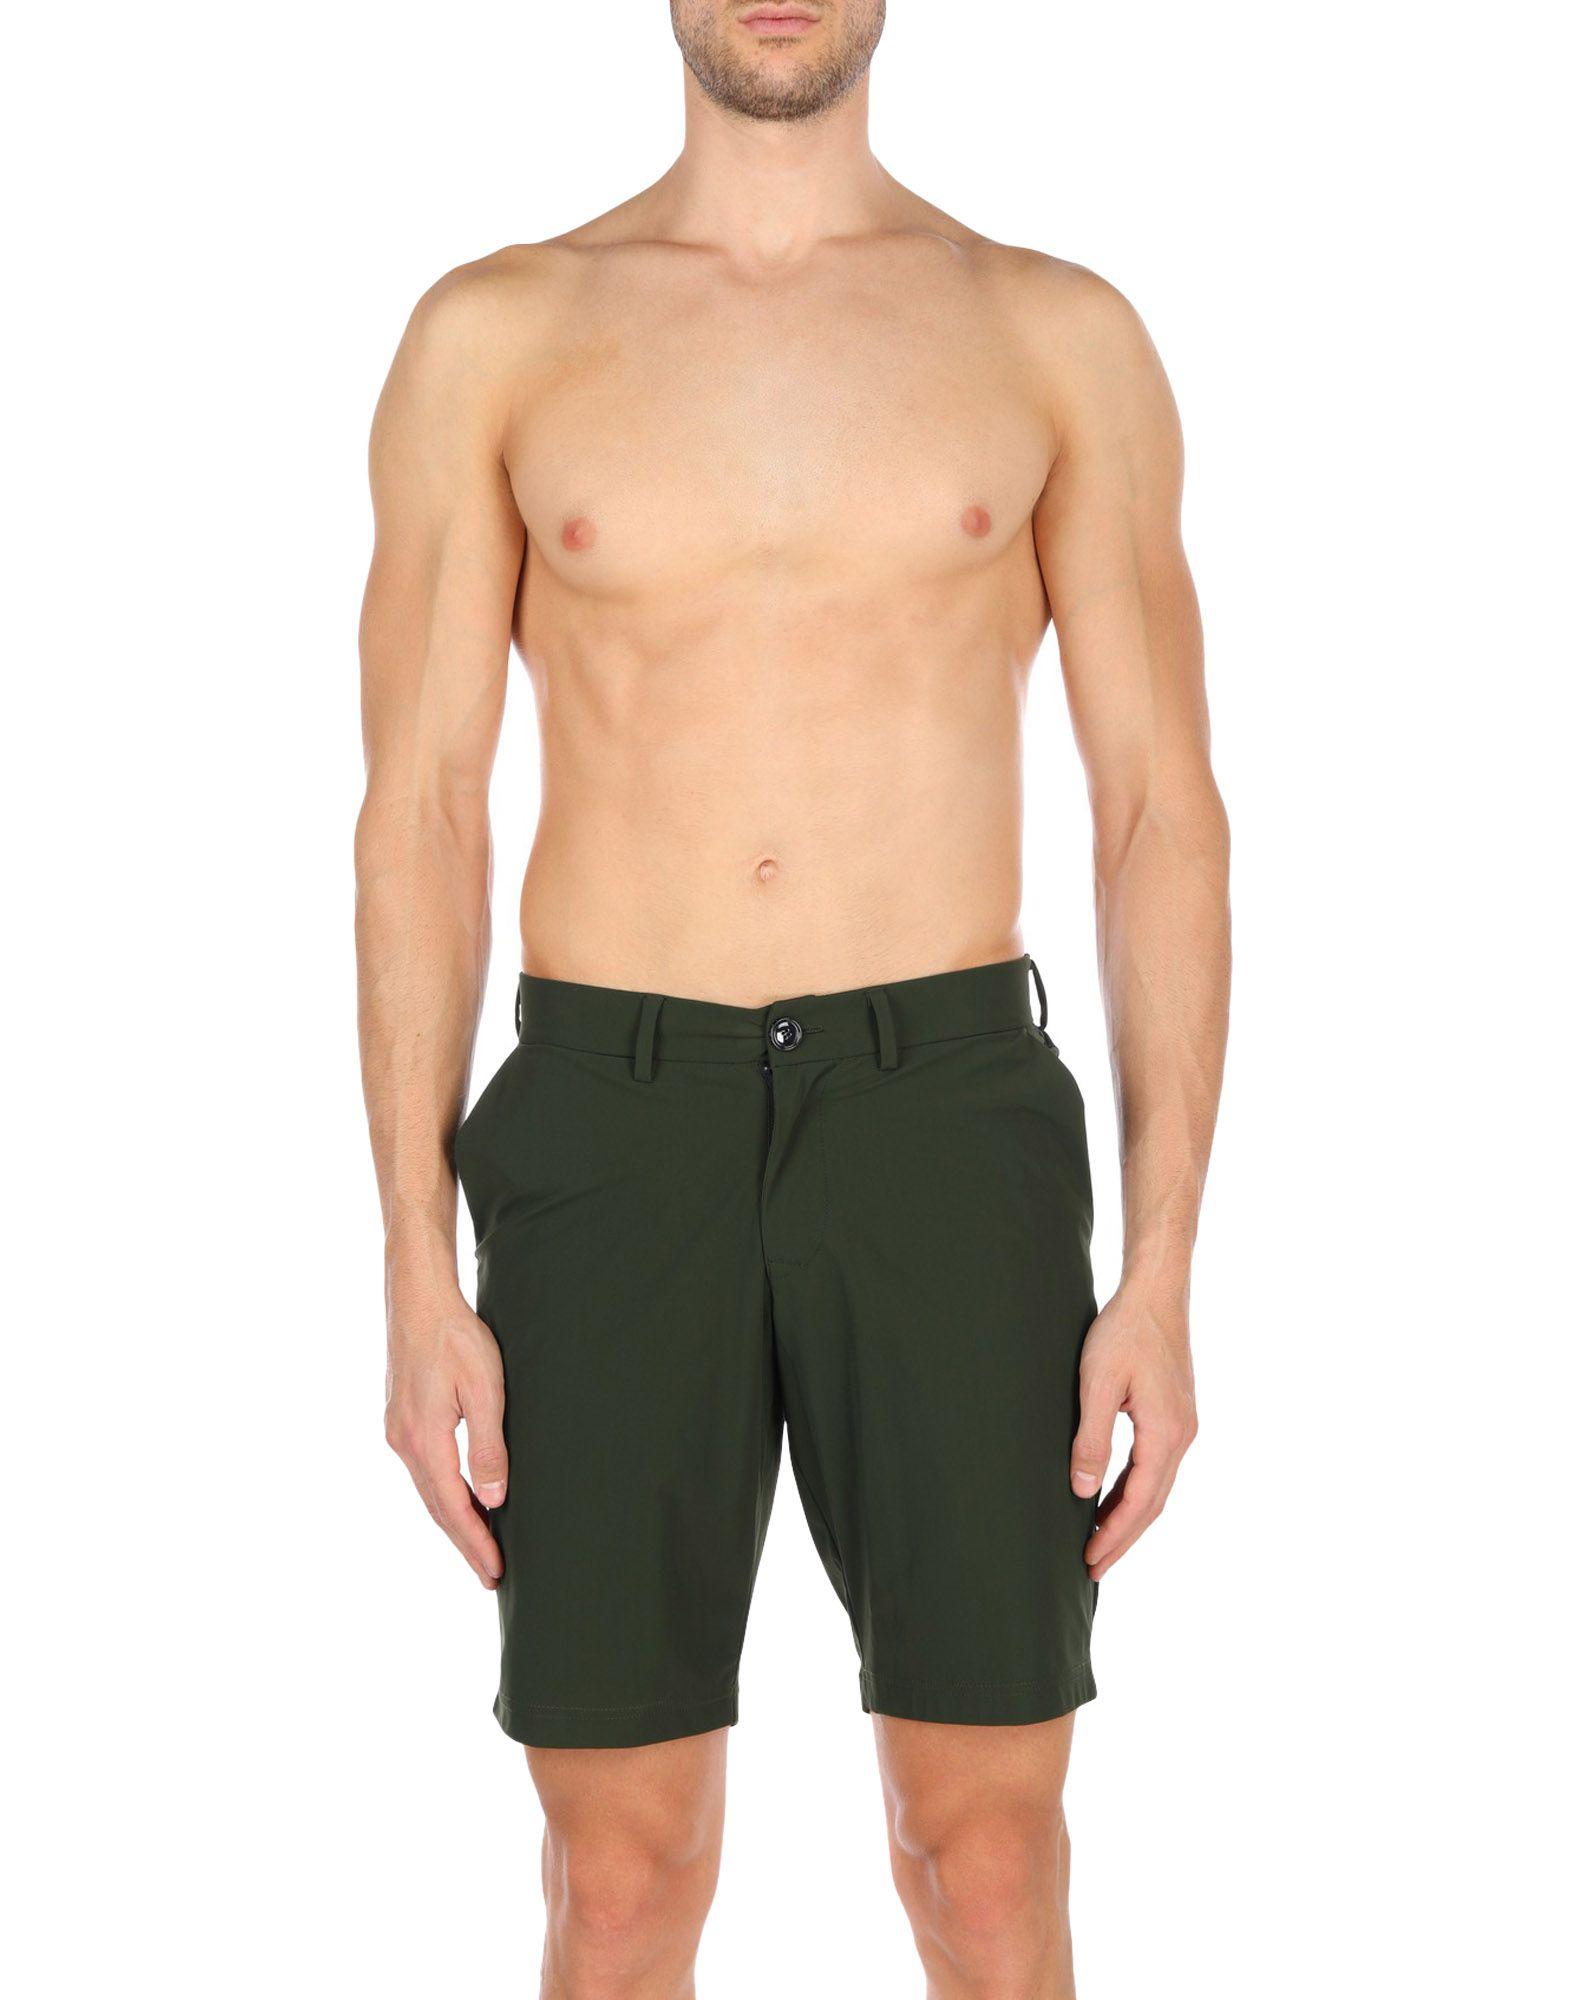 Rrd Synthetic Swim Trunks in Military Green (Green) for Men - Lyst